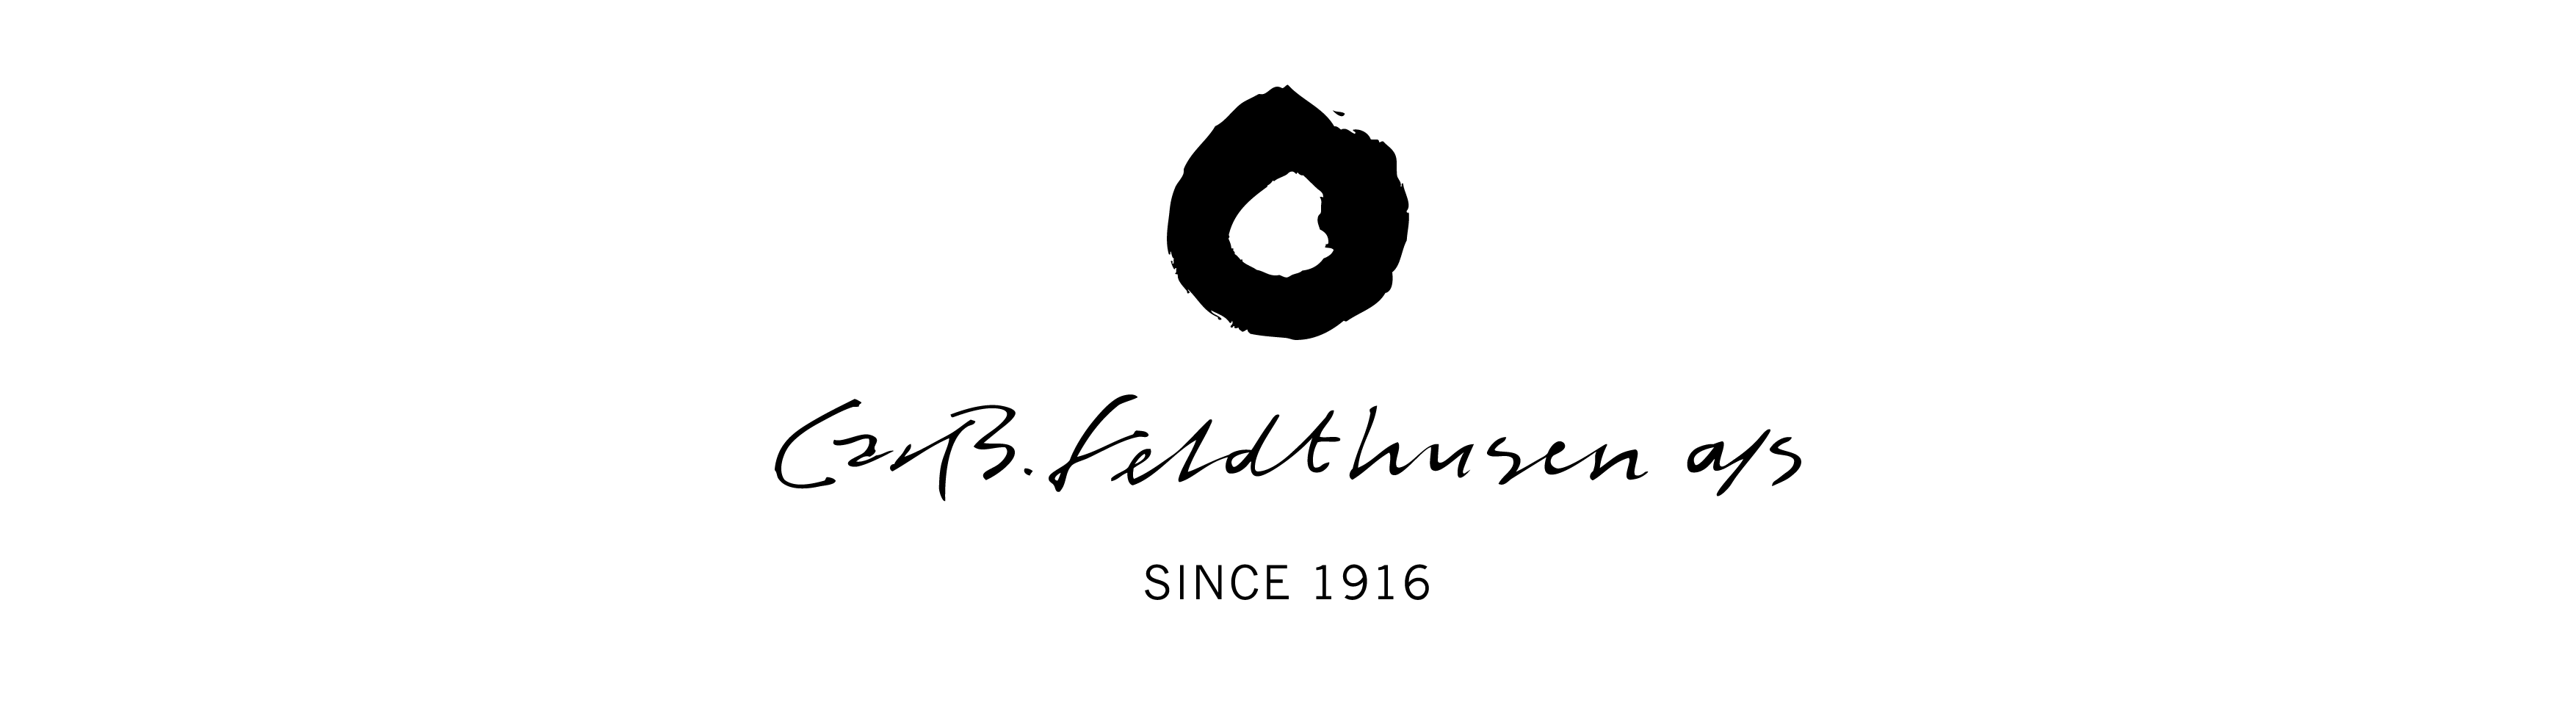 feldthusen-logo-since-1916-black-logo